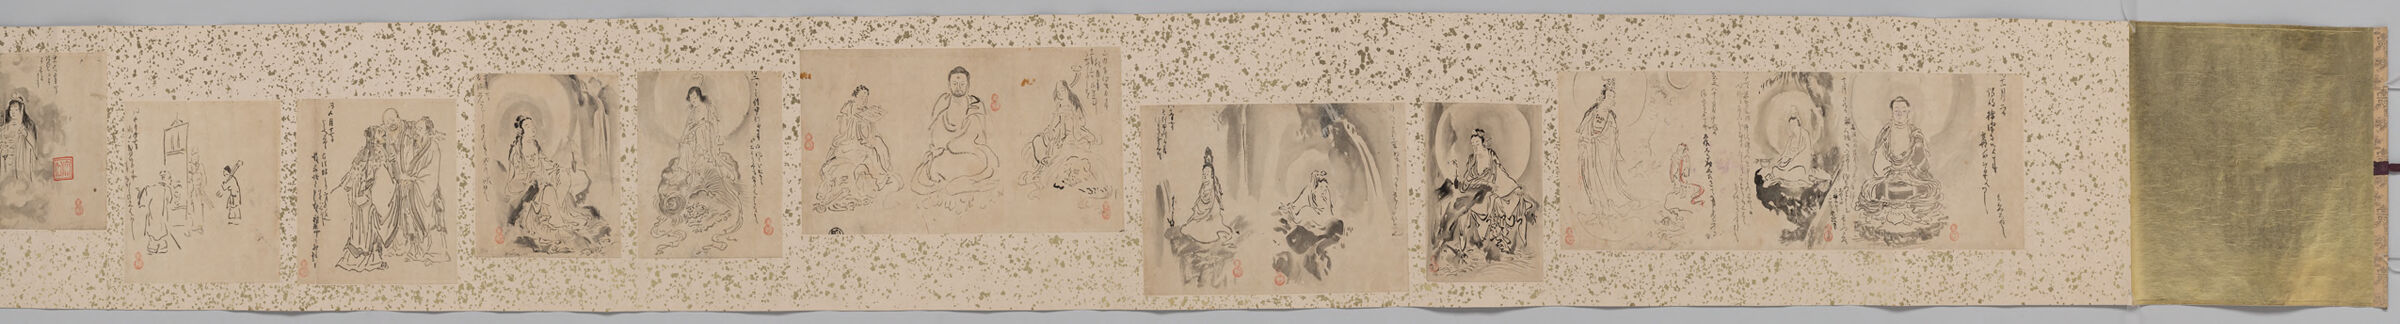 Connoisseur's Sketchbook By Kano Tan'yū (Tan'yū Shukuzu), Copies Of Buddhist Paintings, Vol. Ii